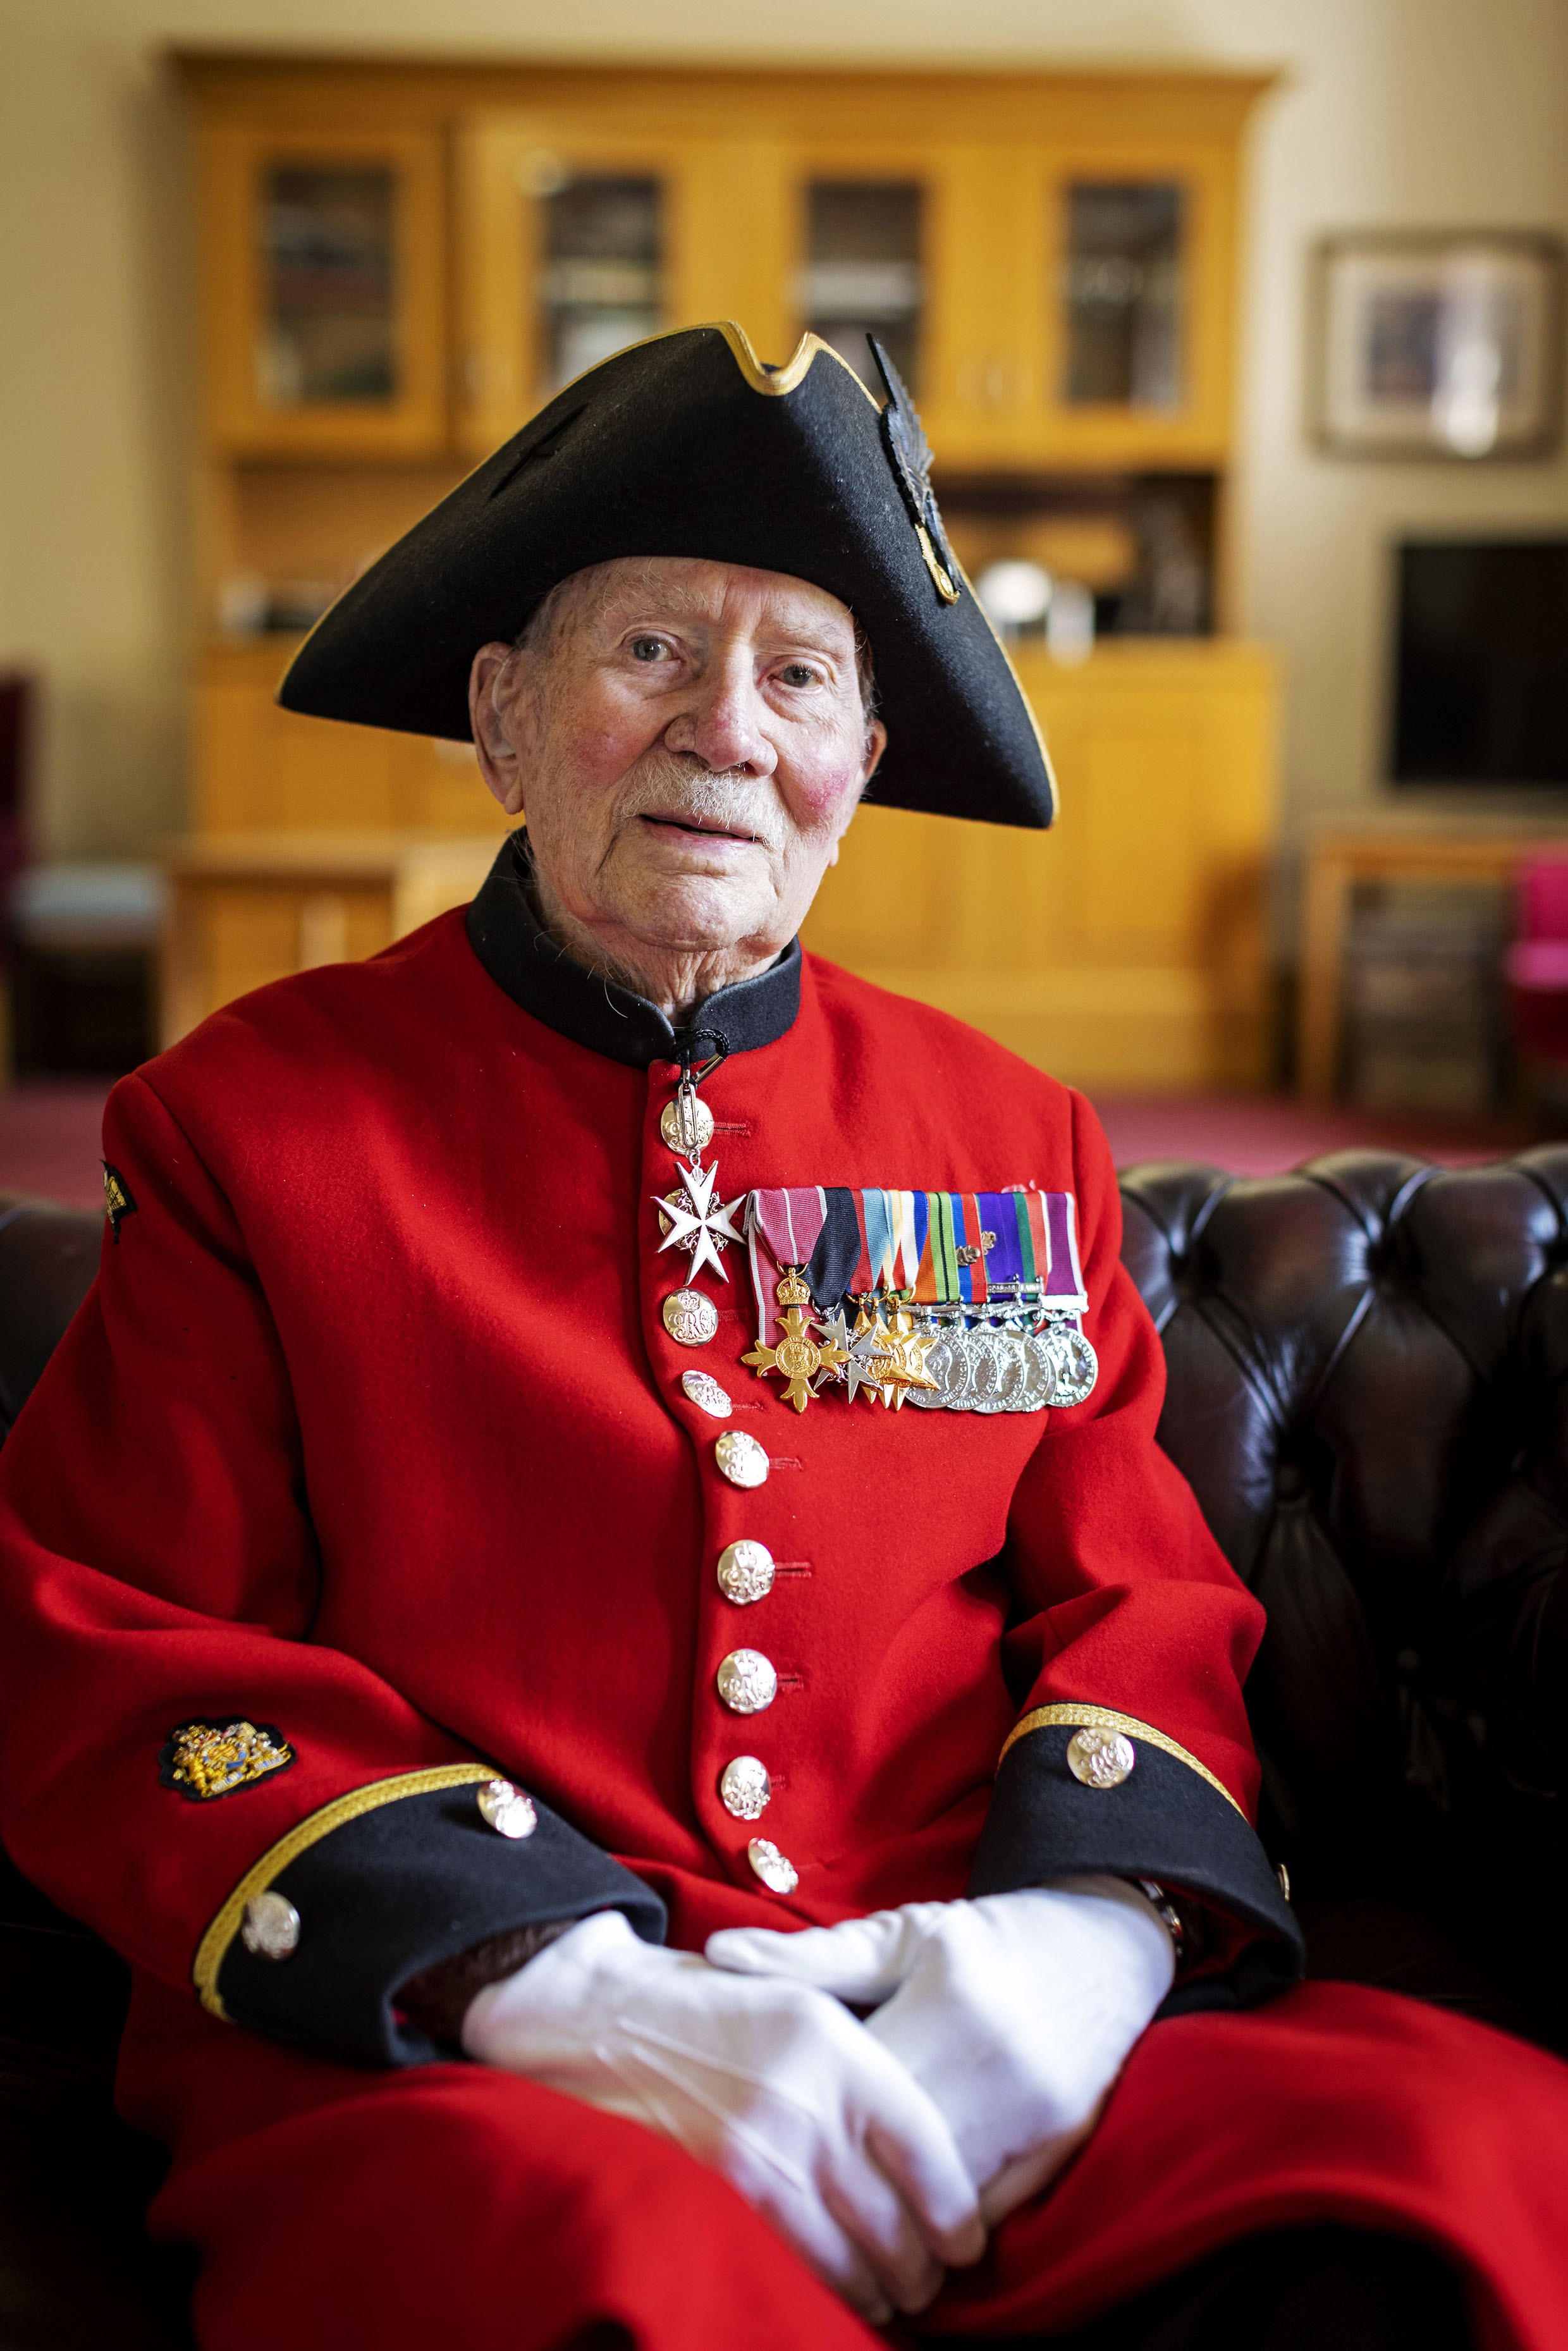 Chelsea Pensioner John Humphrey's sitting in scarlet uniform